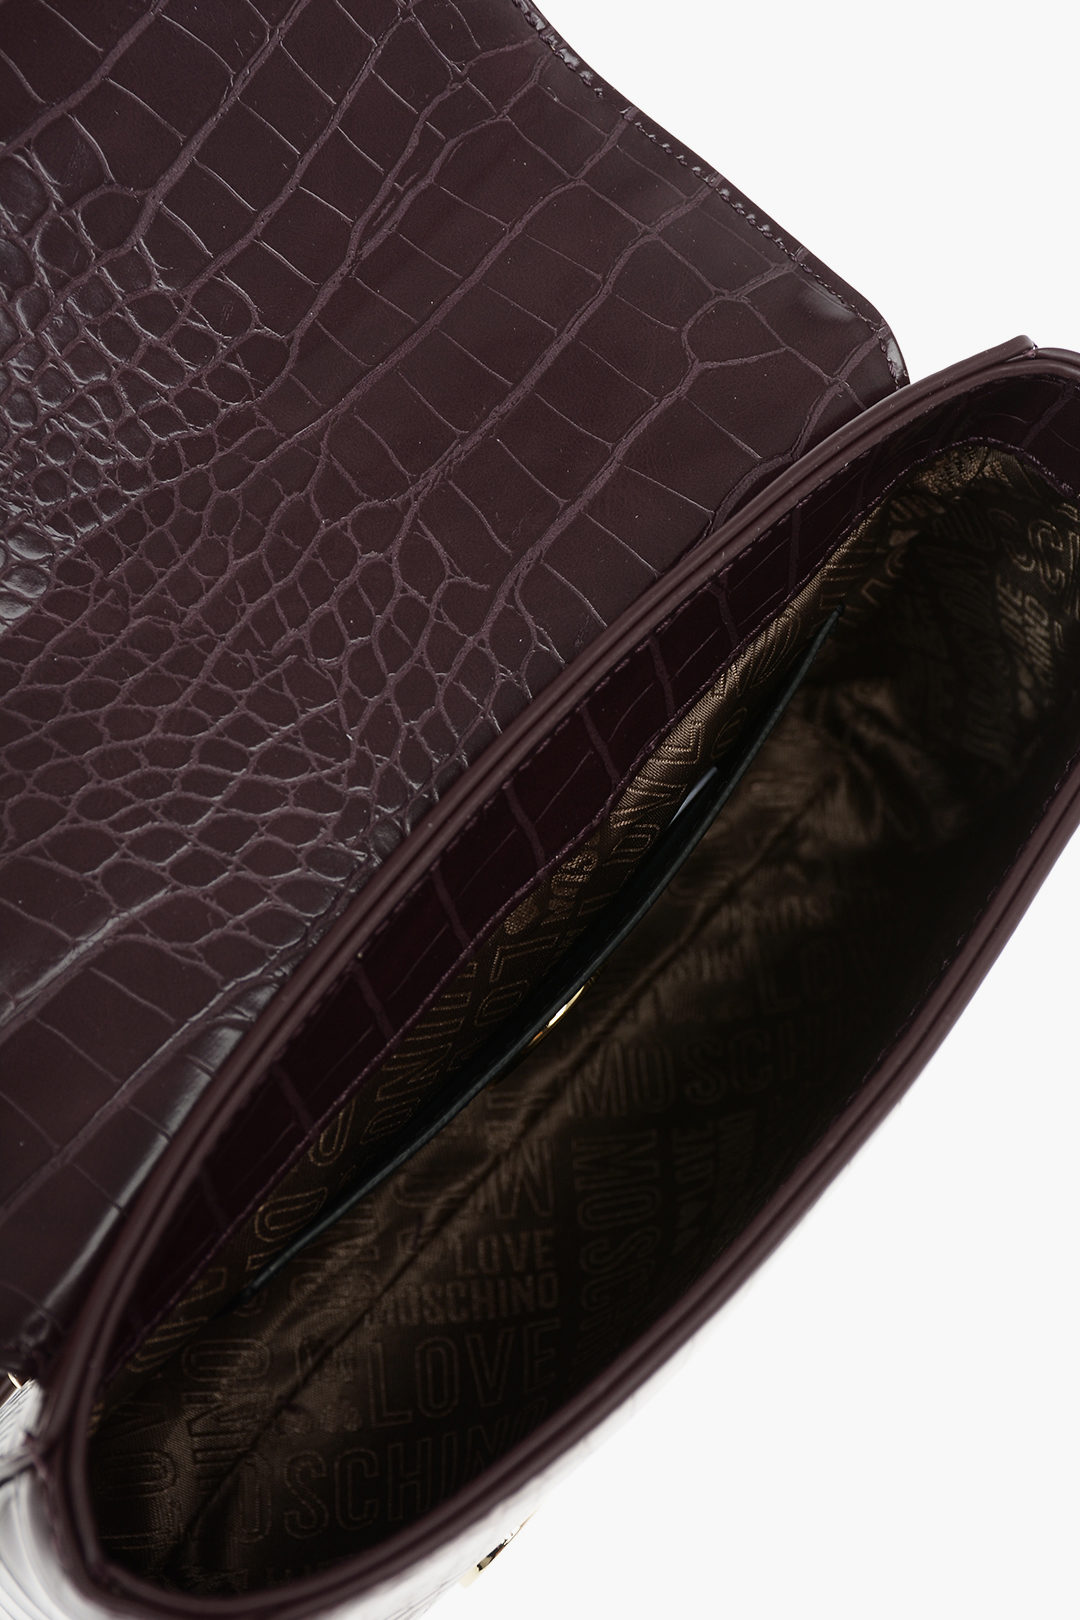 LOVE Crocodile Printed Faux Leather Crossbody Bag